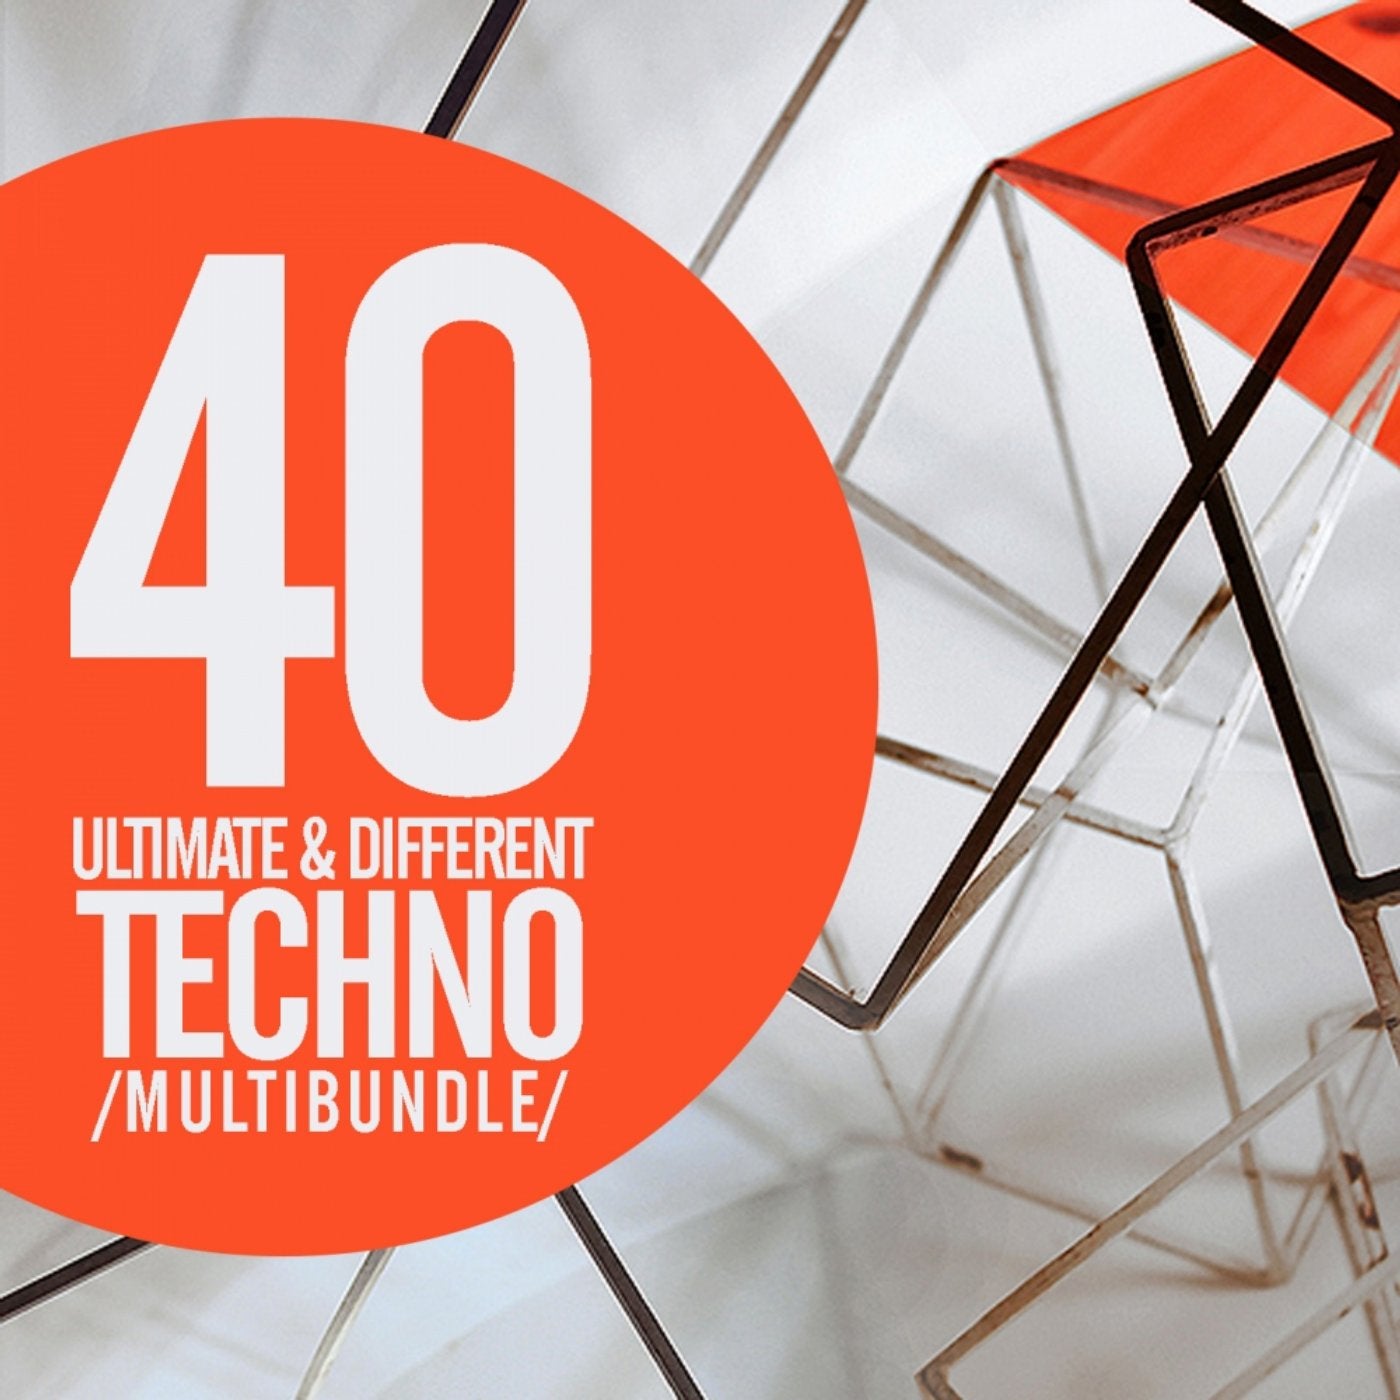 40 Ultimate & Different Techno Multibundle